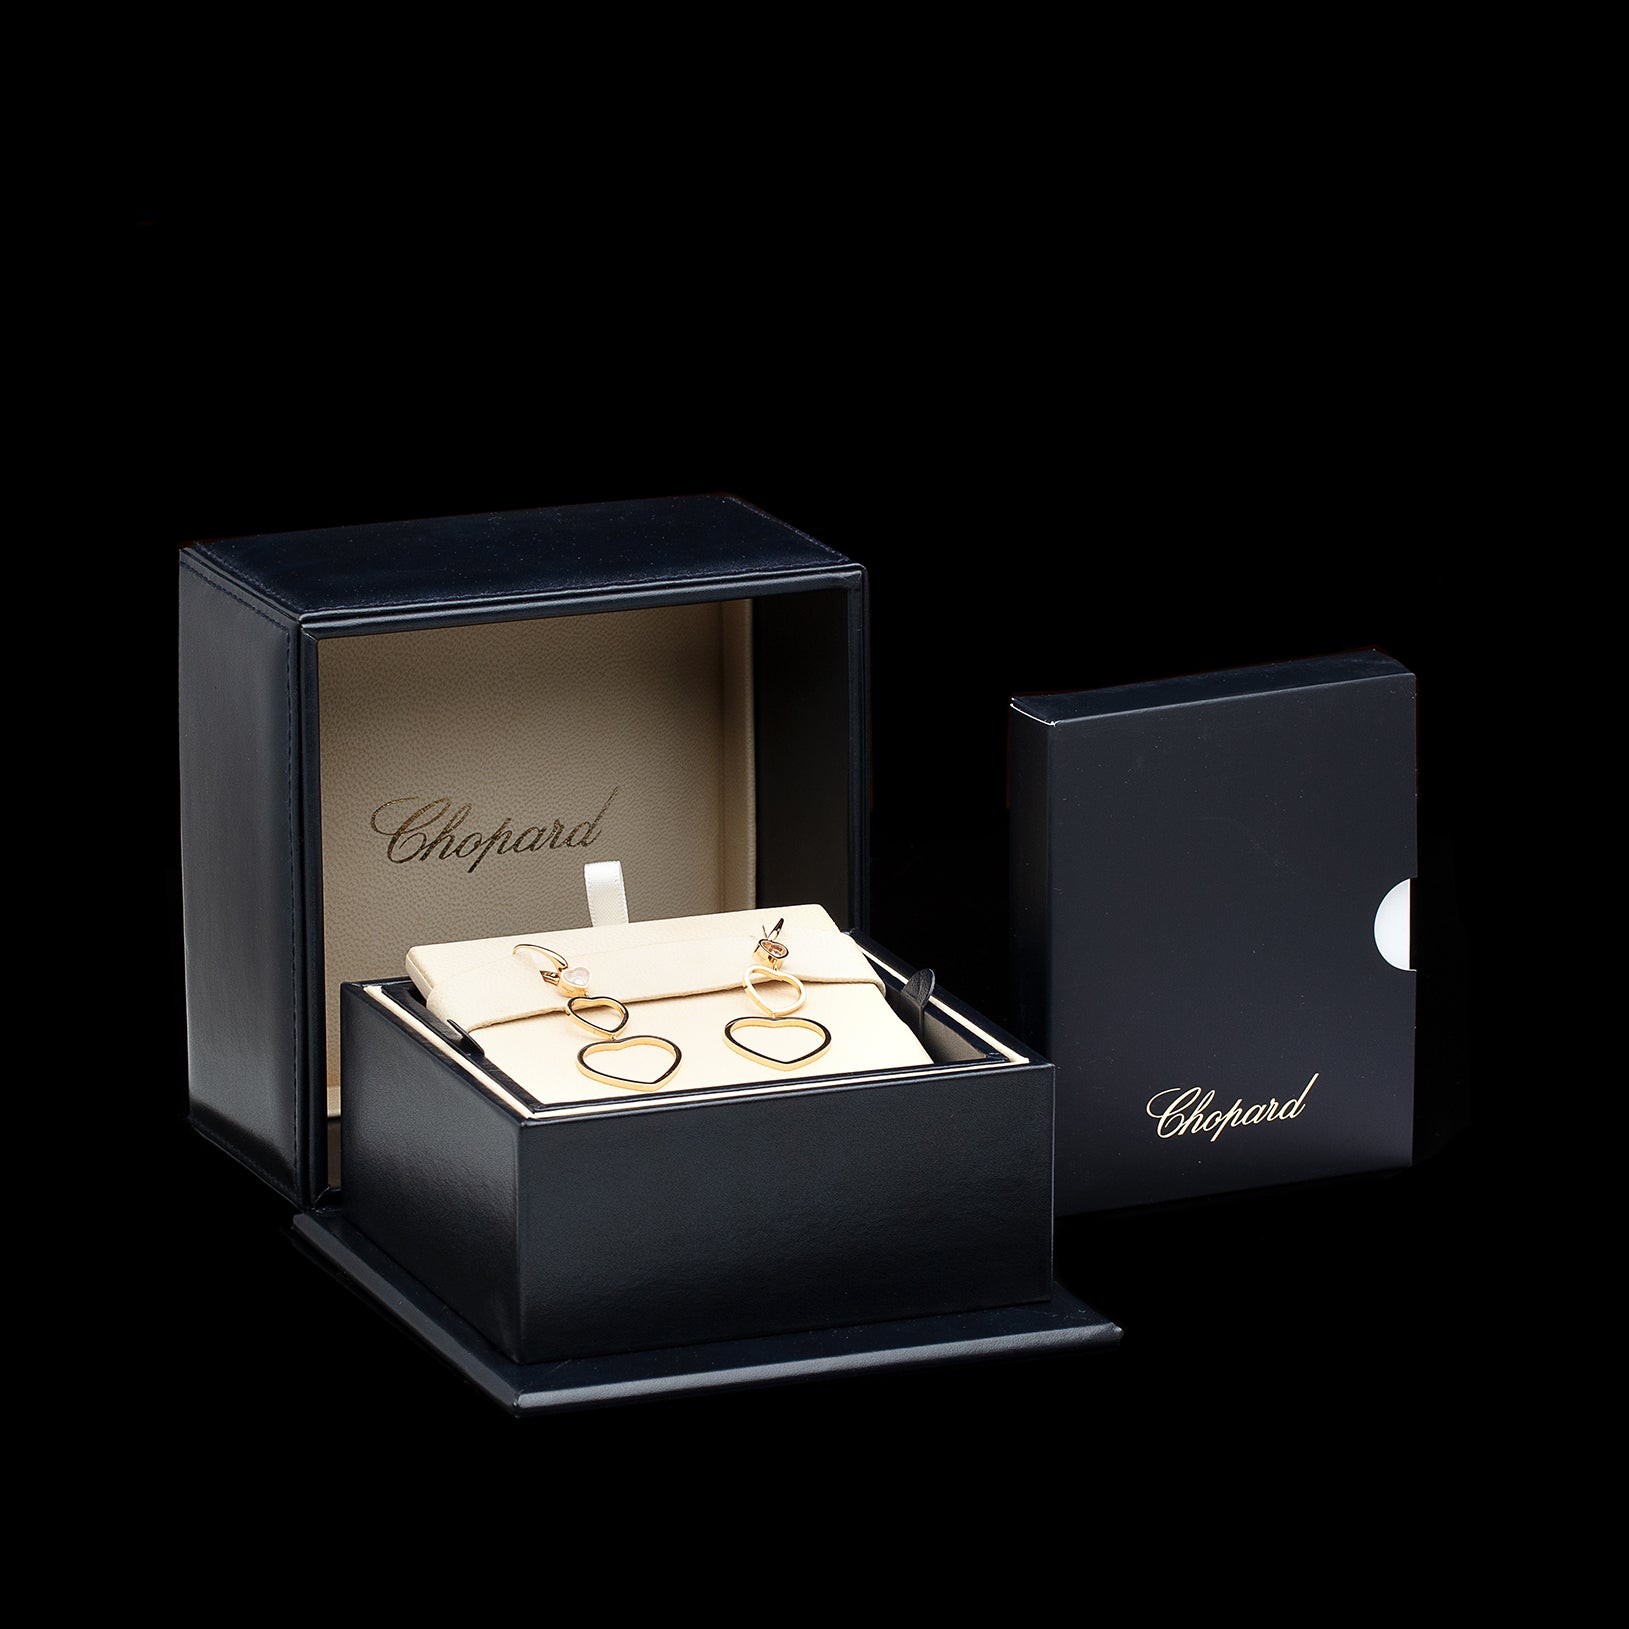 Ashoka Diamond Drop Earrings in 18K Rose Gold, Style #E-2377P-GROUP-18KP